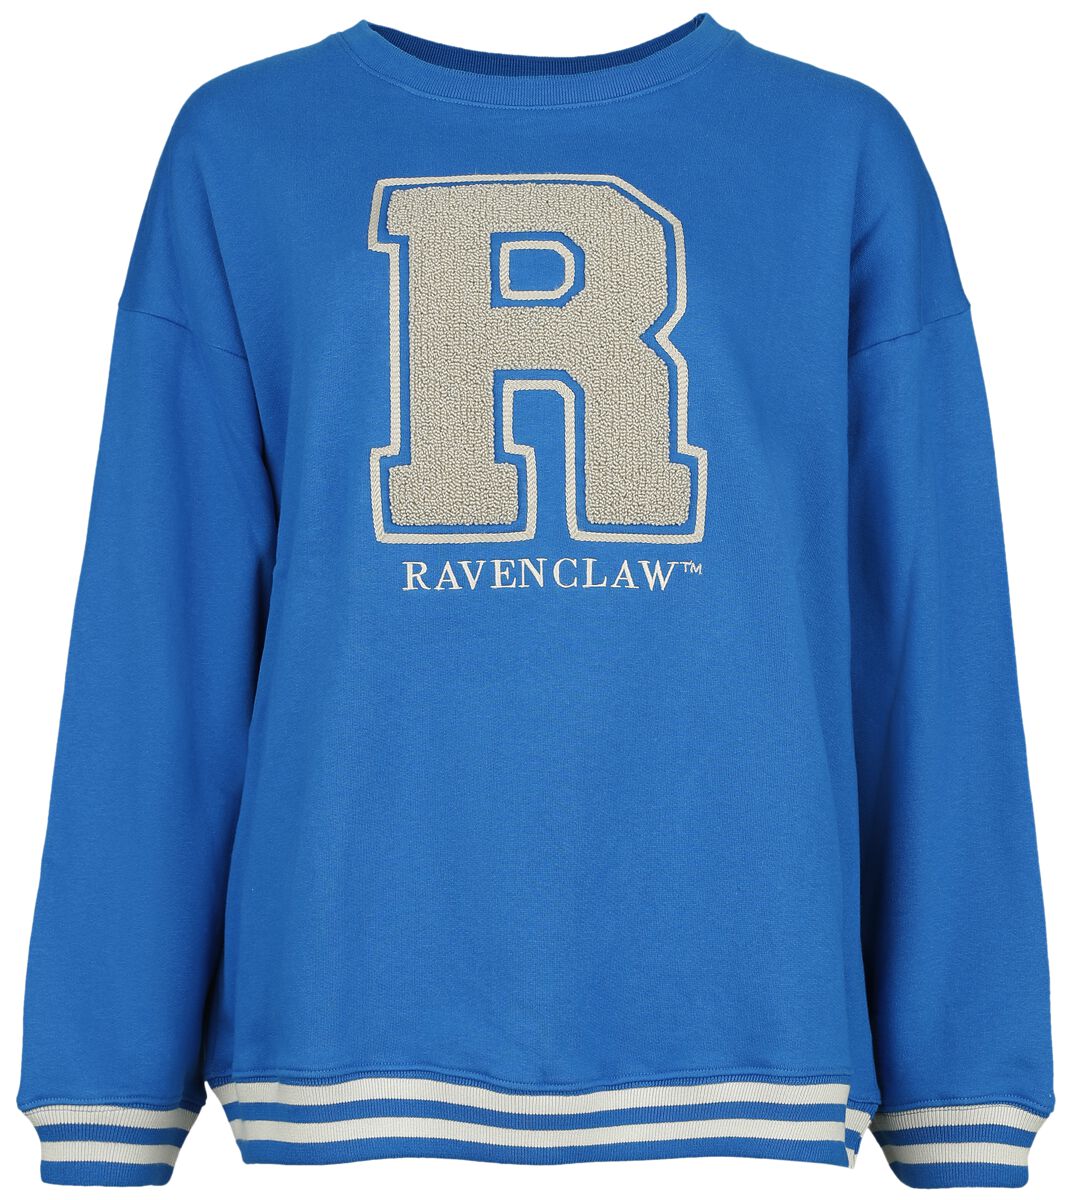 Harry Potter Ravenclaw Sweatshirt blau in L